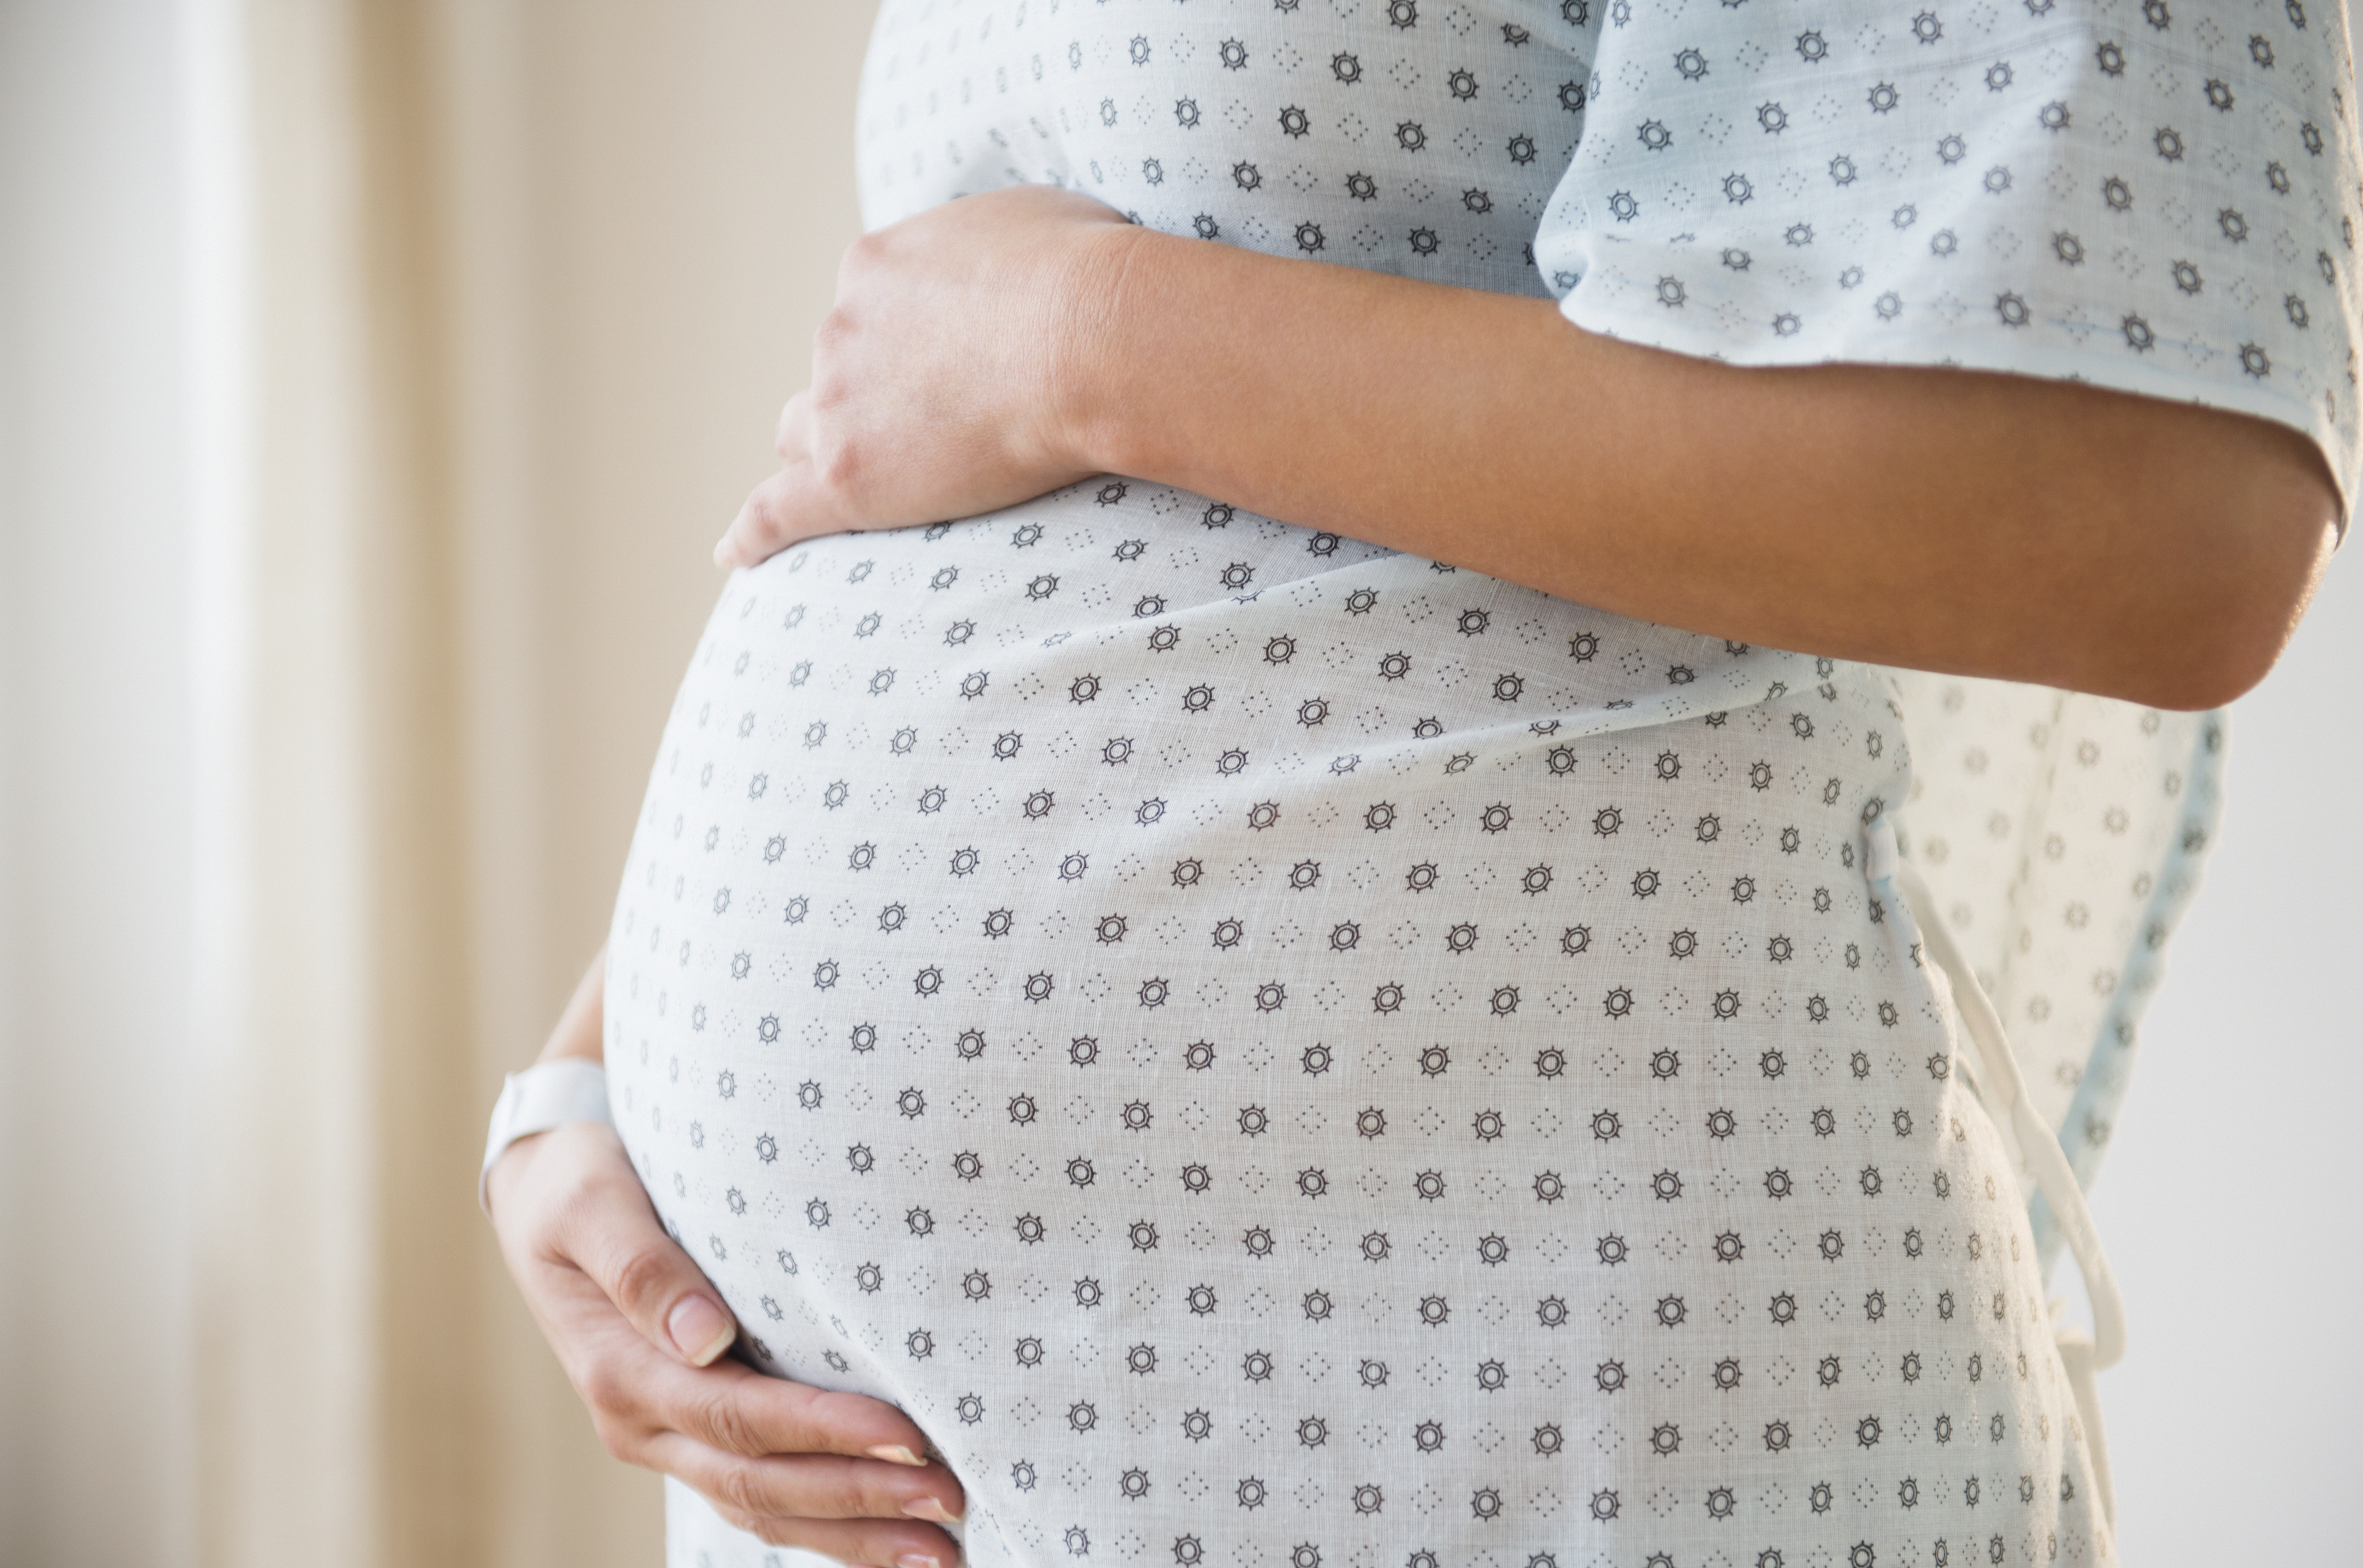 Epidemia de cesáreas no Brasil: Registro alarmante, confira